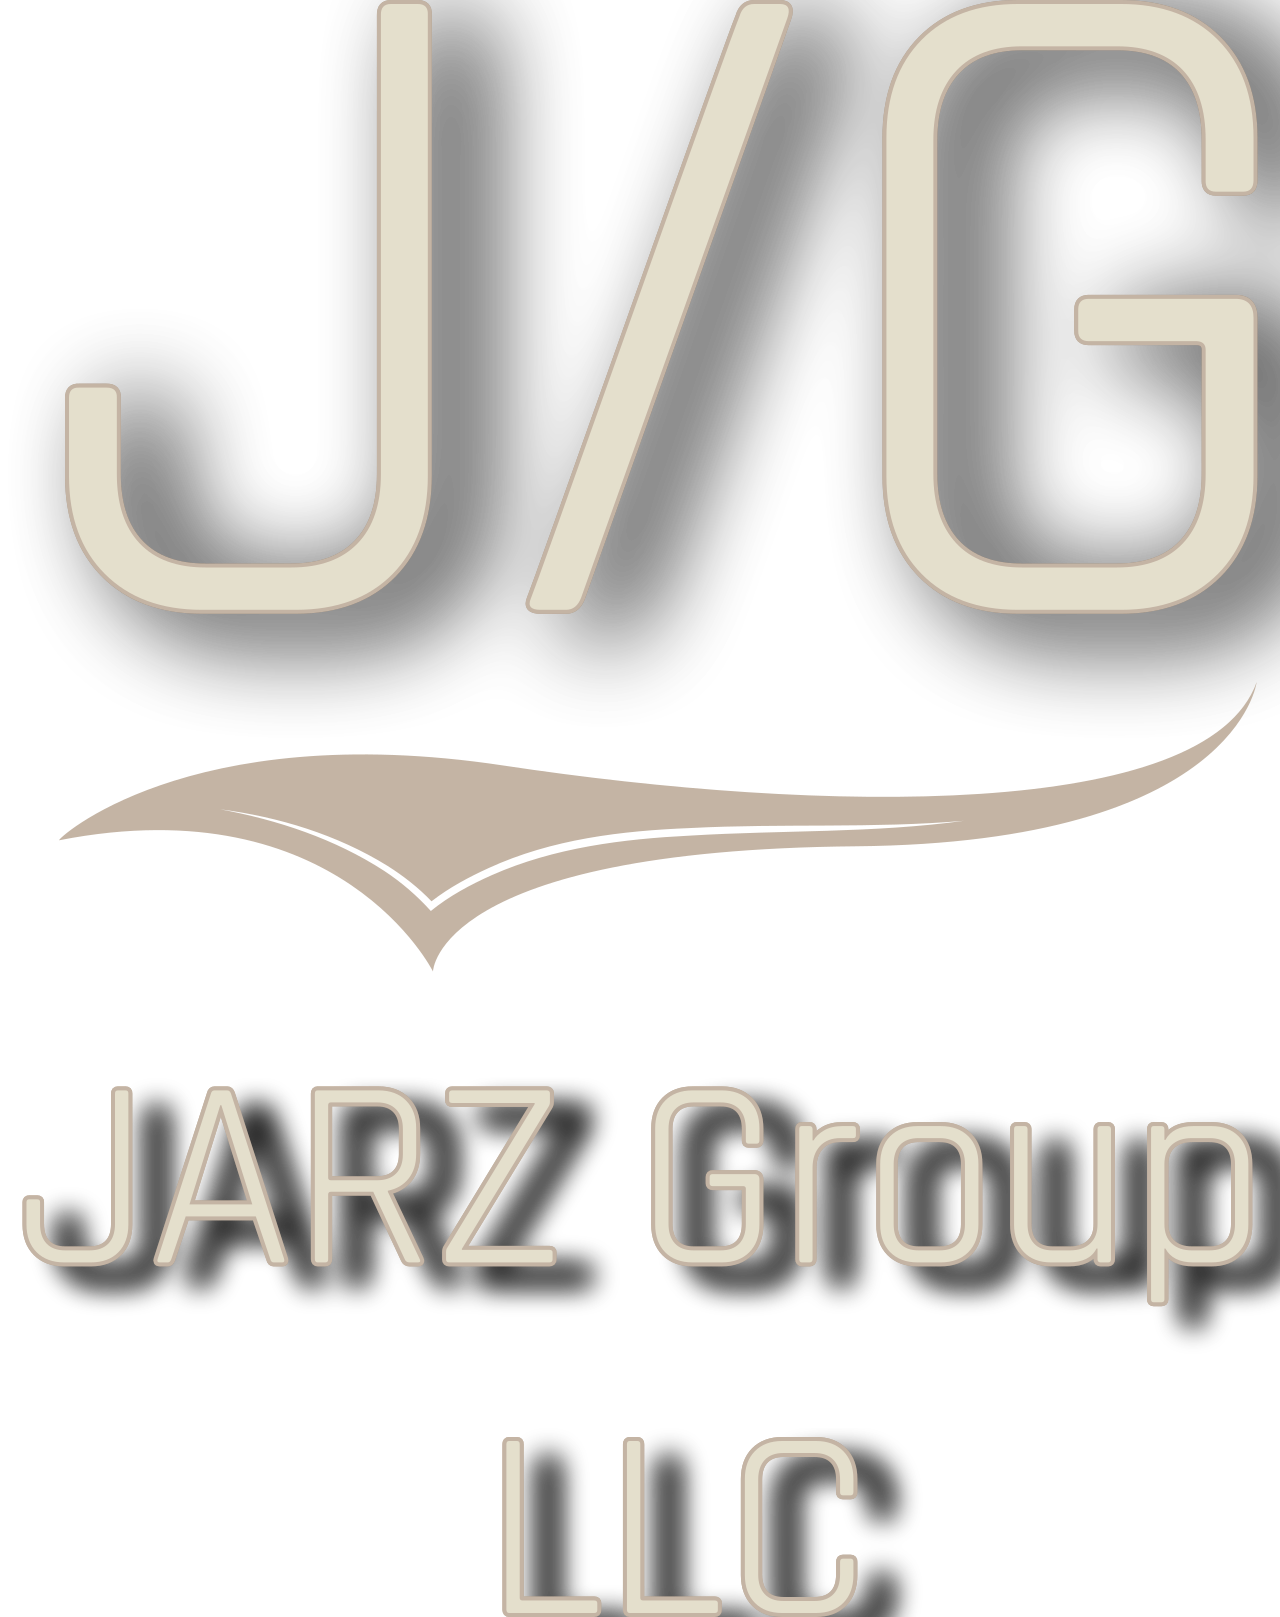 JARZ Group 
LLC's web page